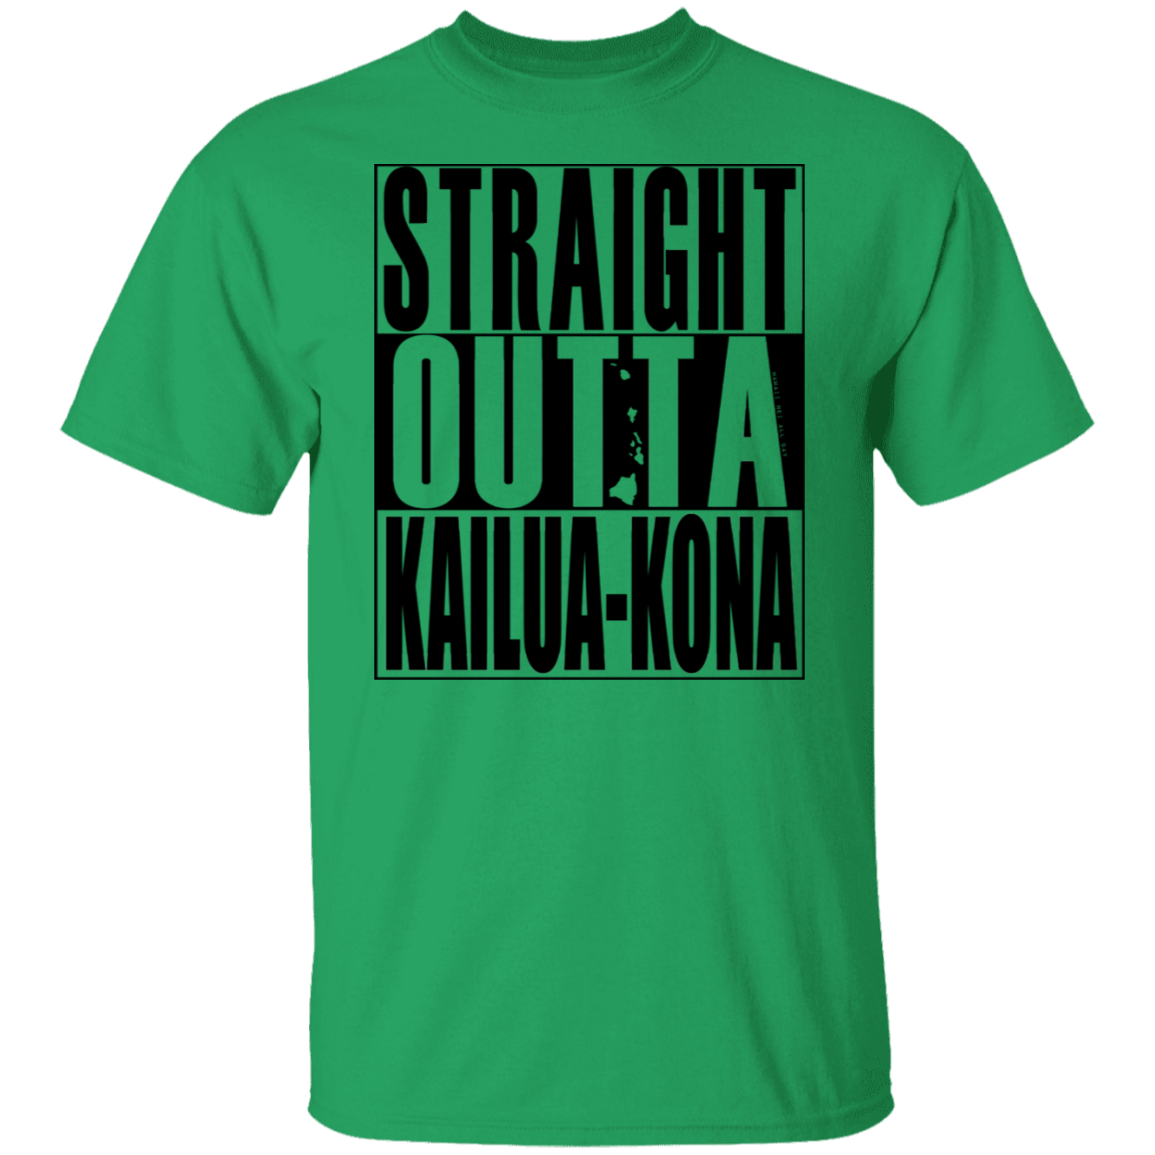 Straight Outta Kailua-Kona(black ink) T-Shirt